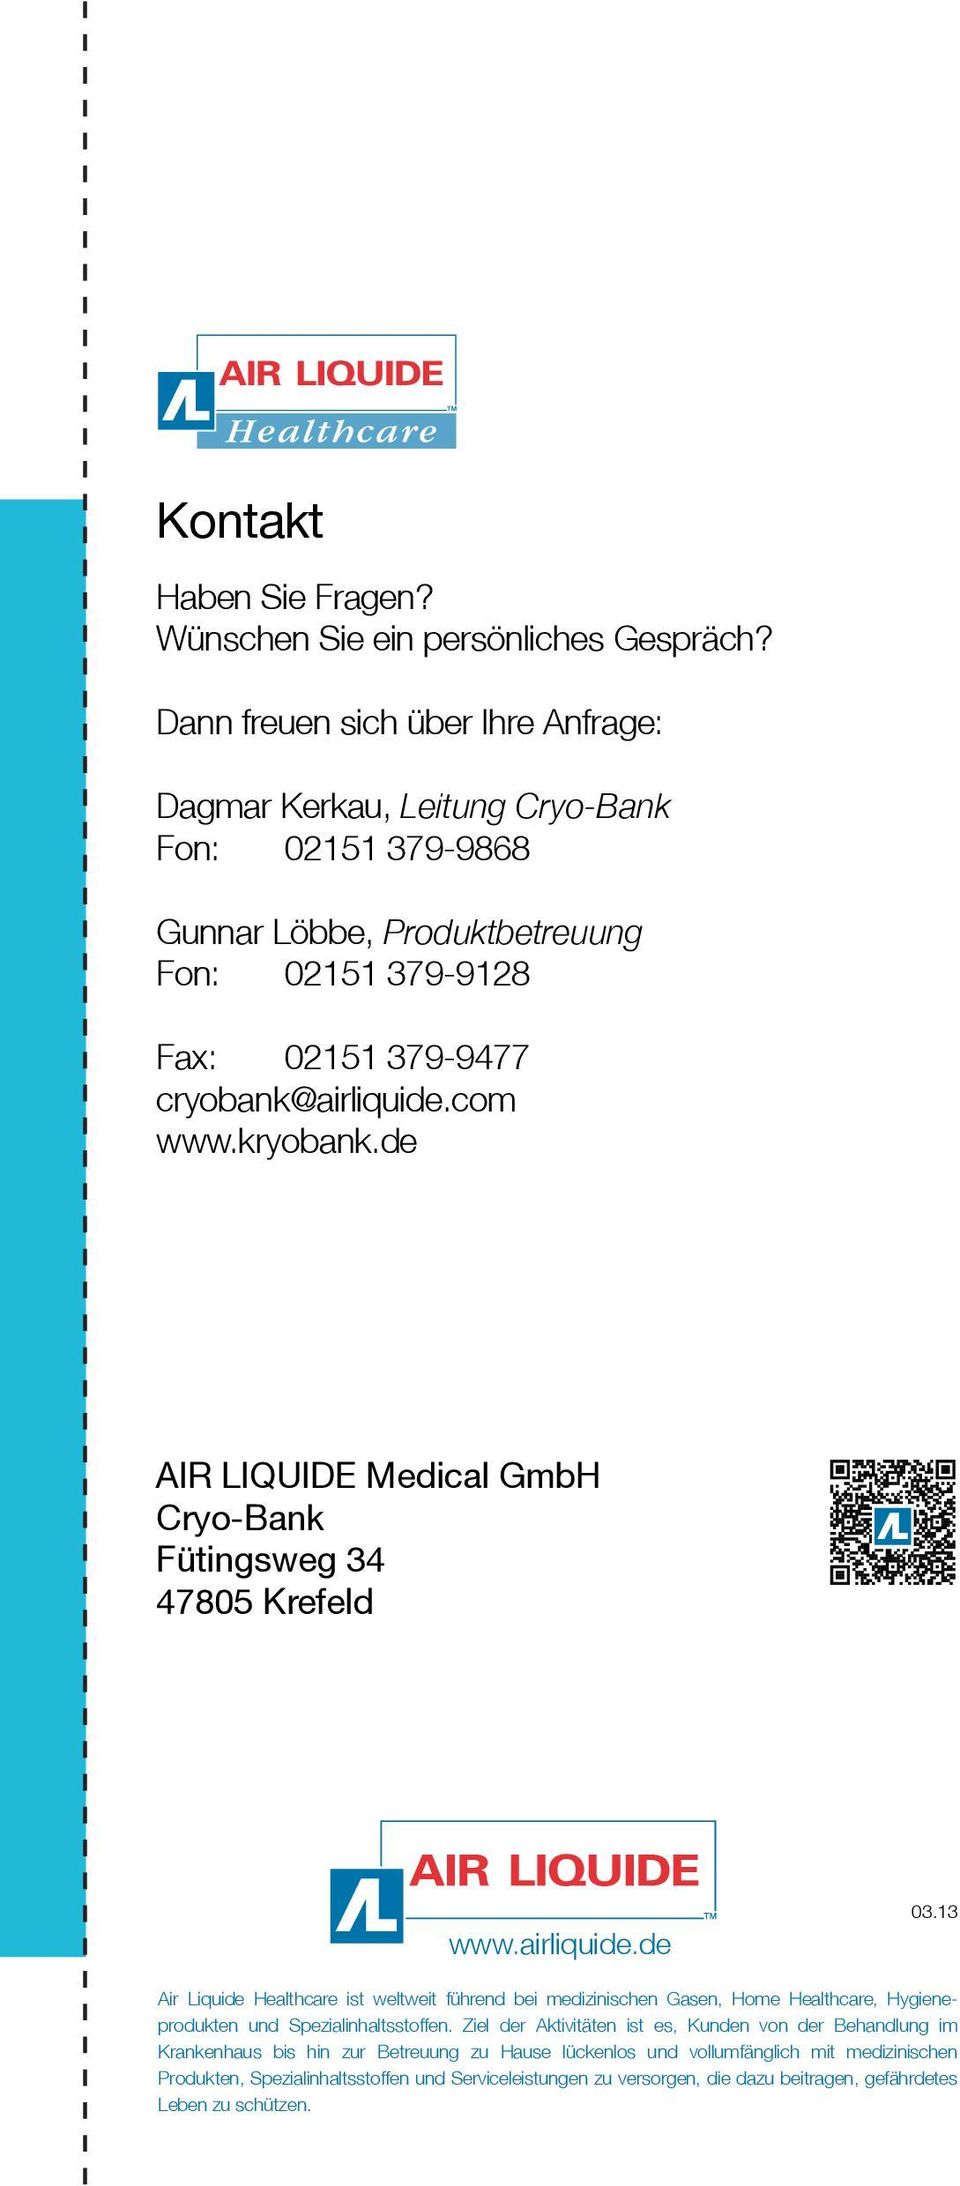 kryobank.de AIR LIQUIDE Medical GmbH Cryo-Bank Fütingsweg 34 47805 Krefeld www.airliquide.de 03.